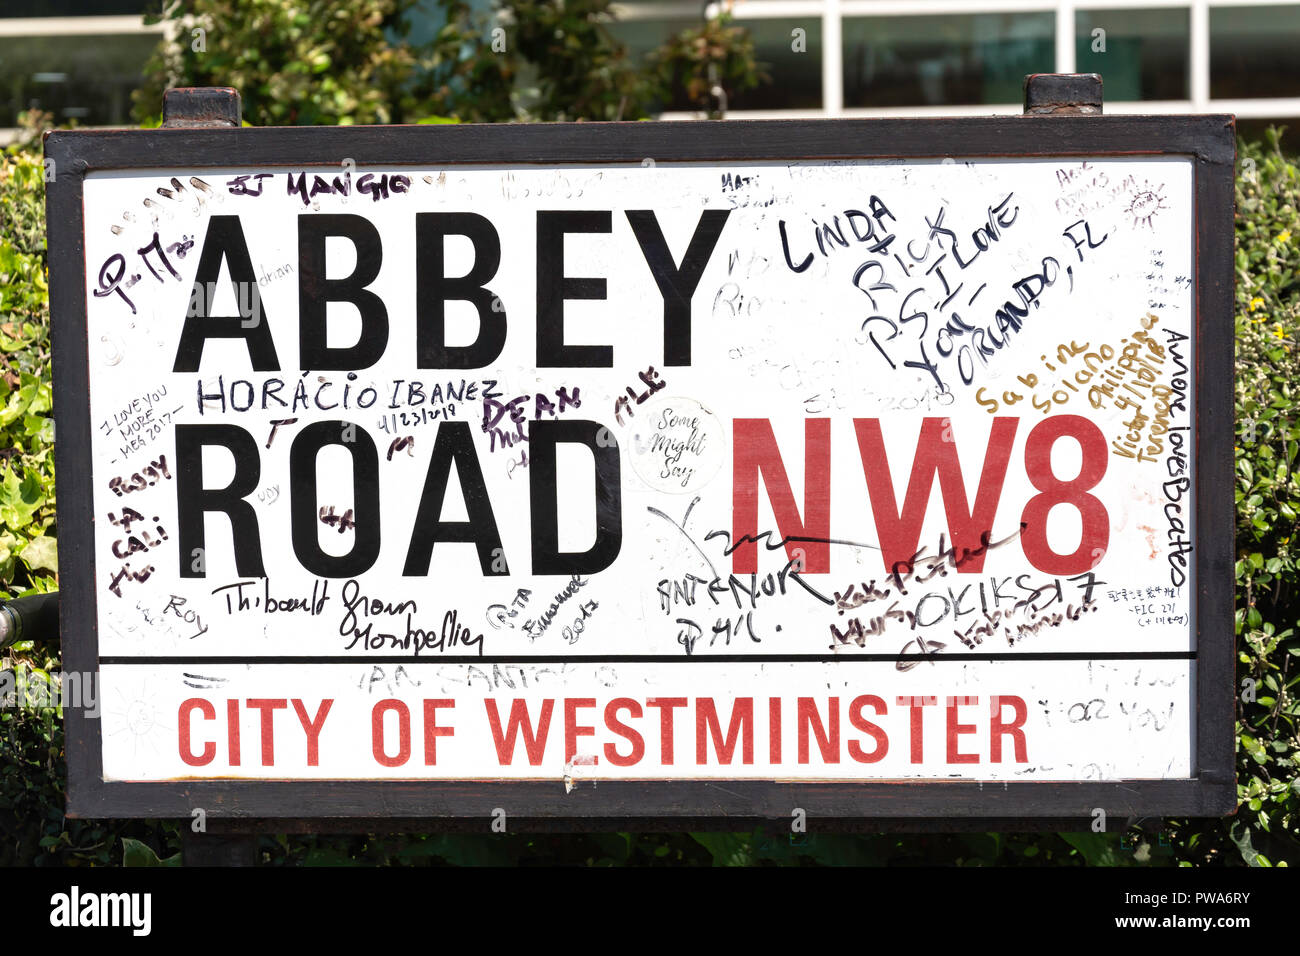 Graffiti sur une plaque de rue, Abbey Road, St John's Wood, City of westminster, Greater London, Angleterre, Royaume-Uni Banque D'Images